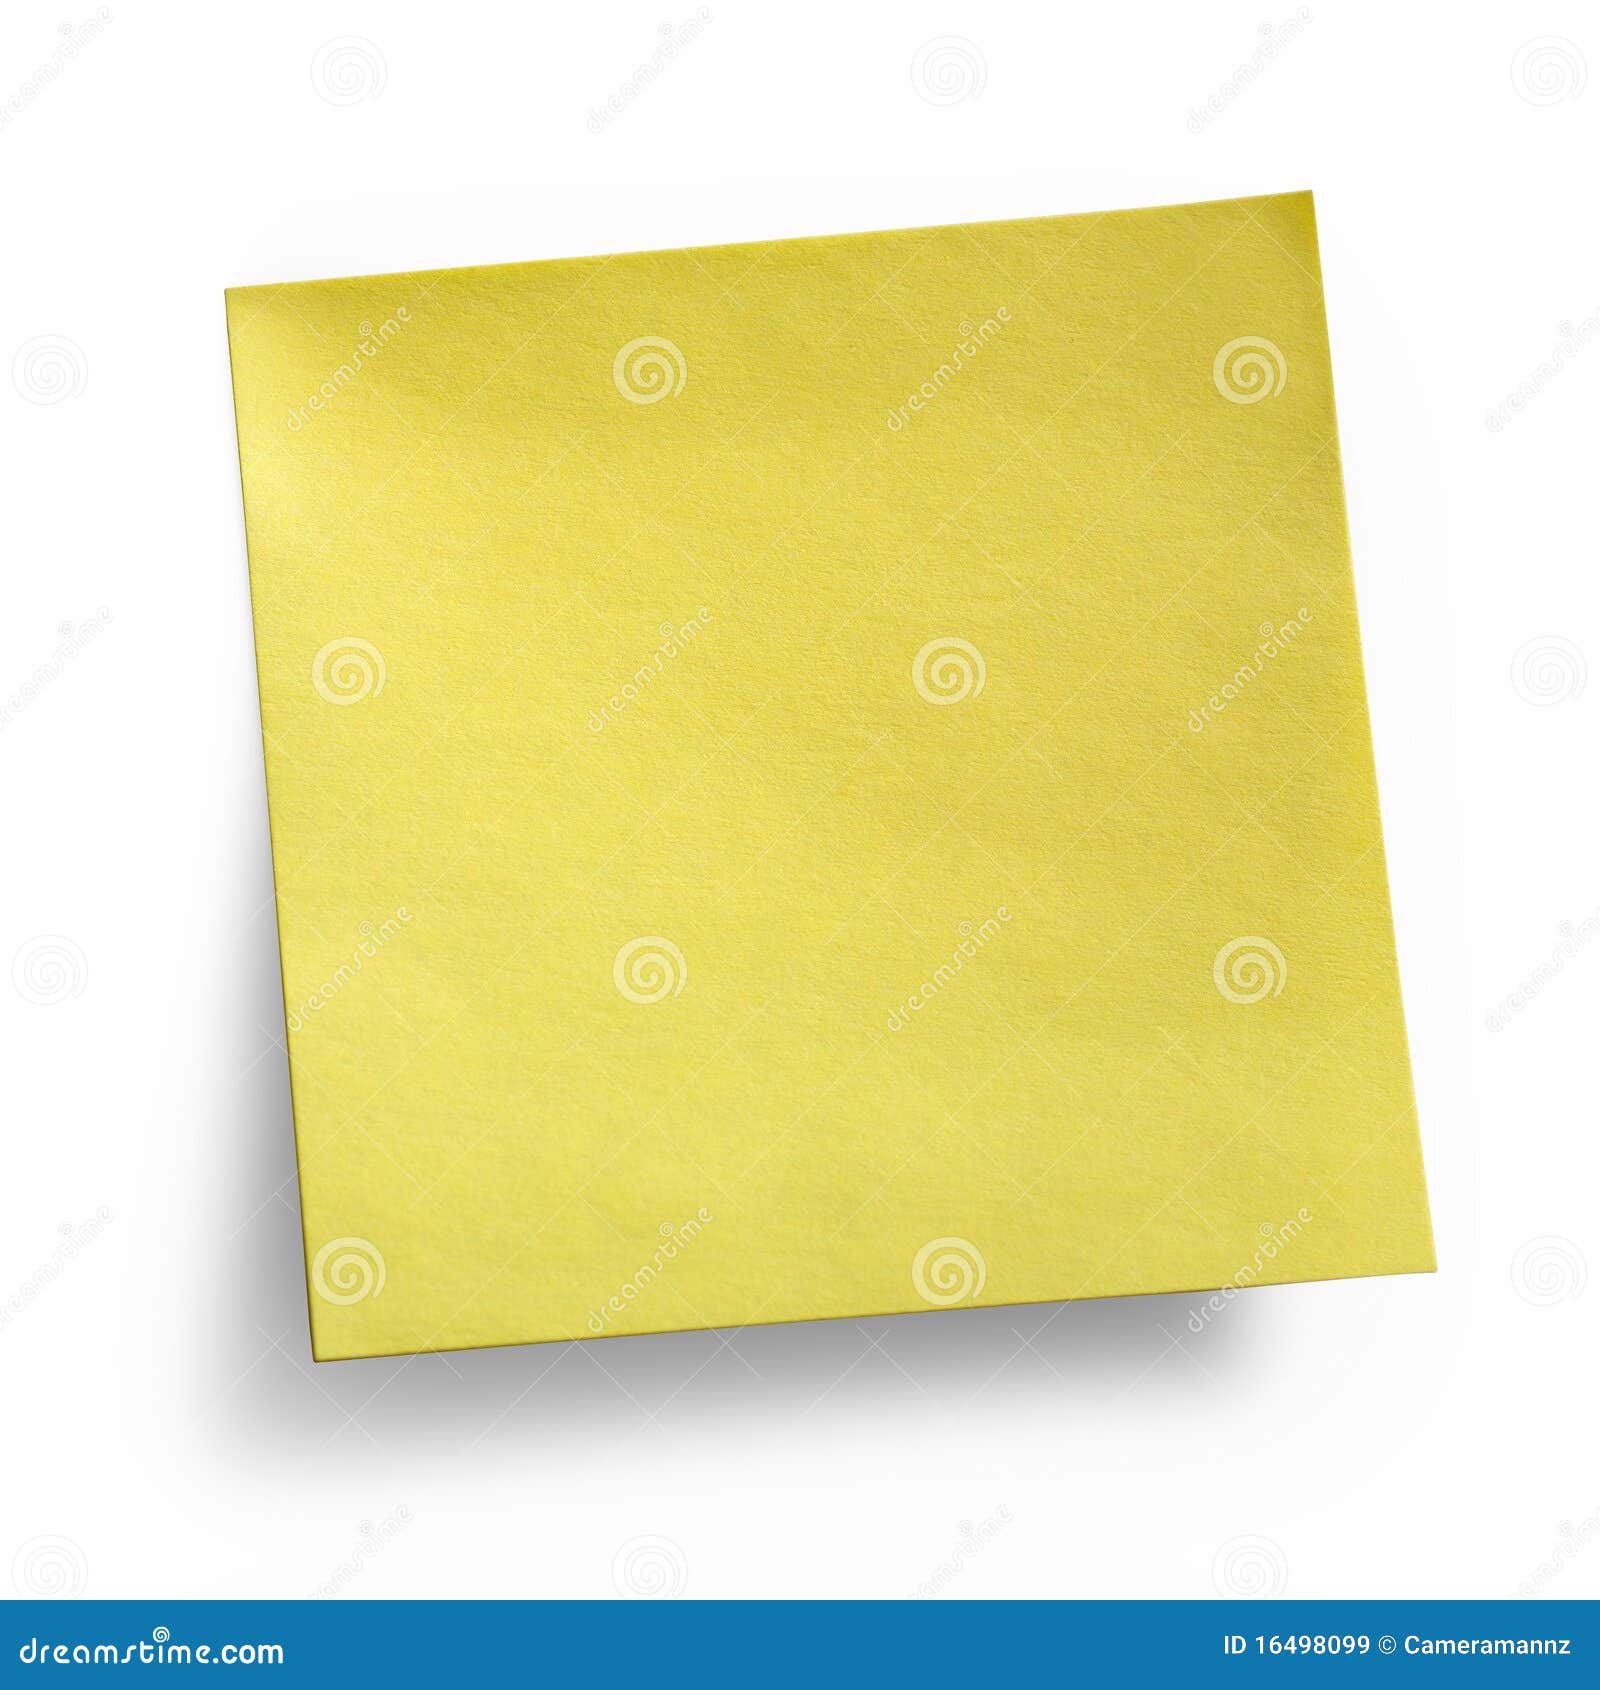 yellow sticky note